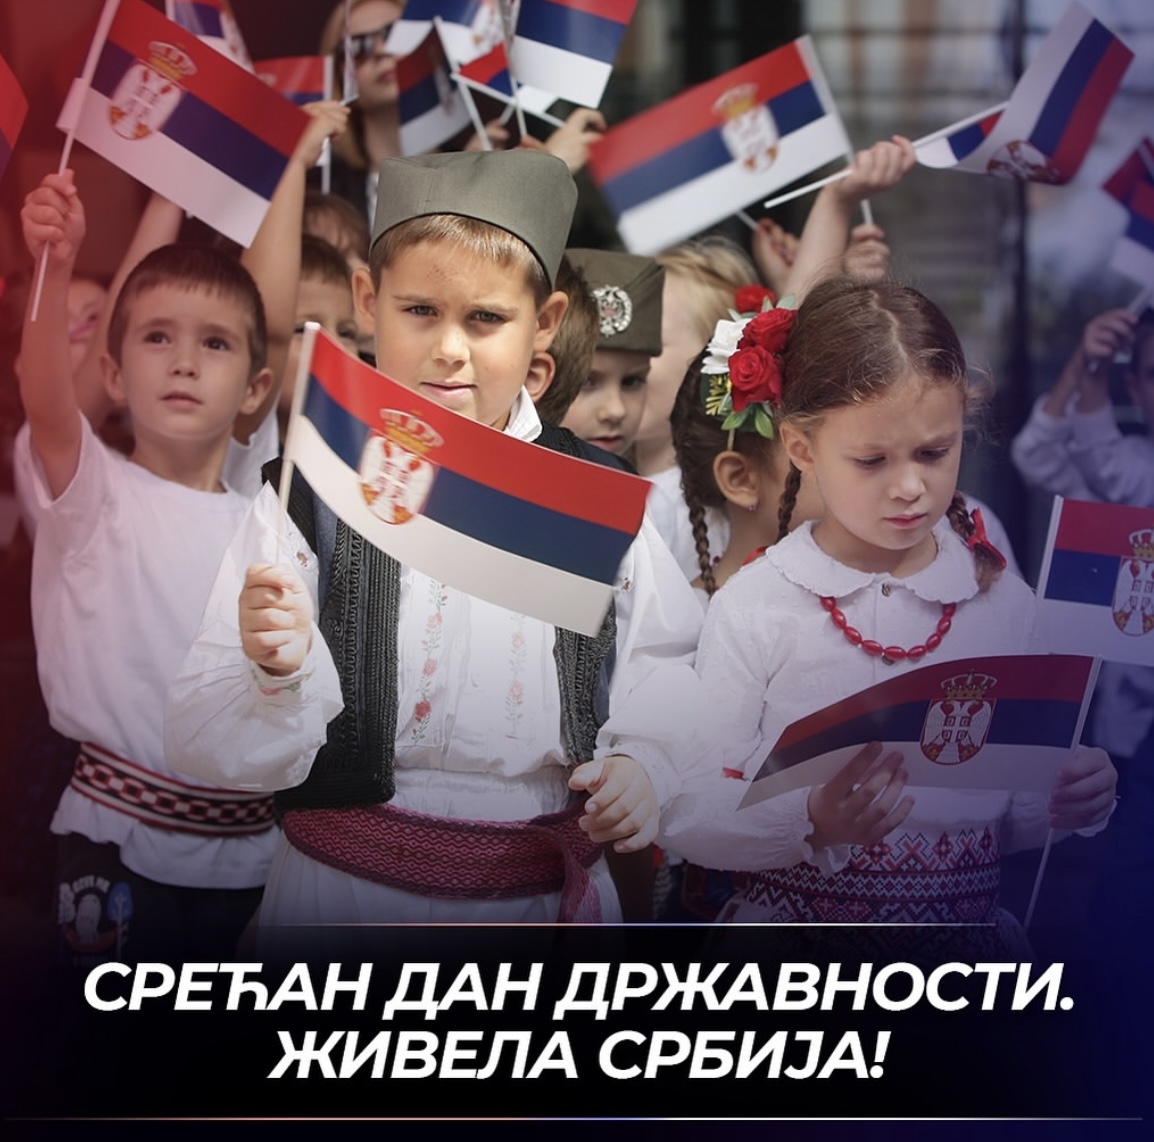 Srbija slavi Dan državnosti: Predsednik Vučić dodeliće više od 100 odlikovanja